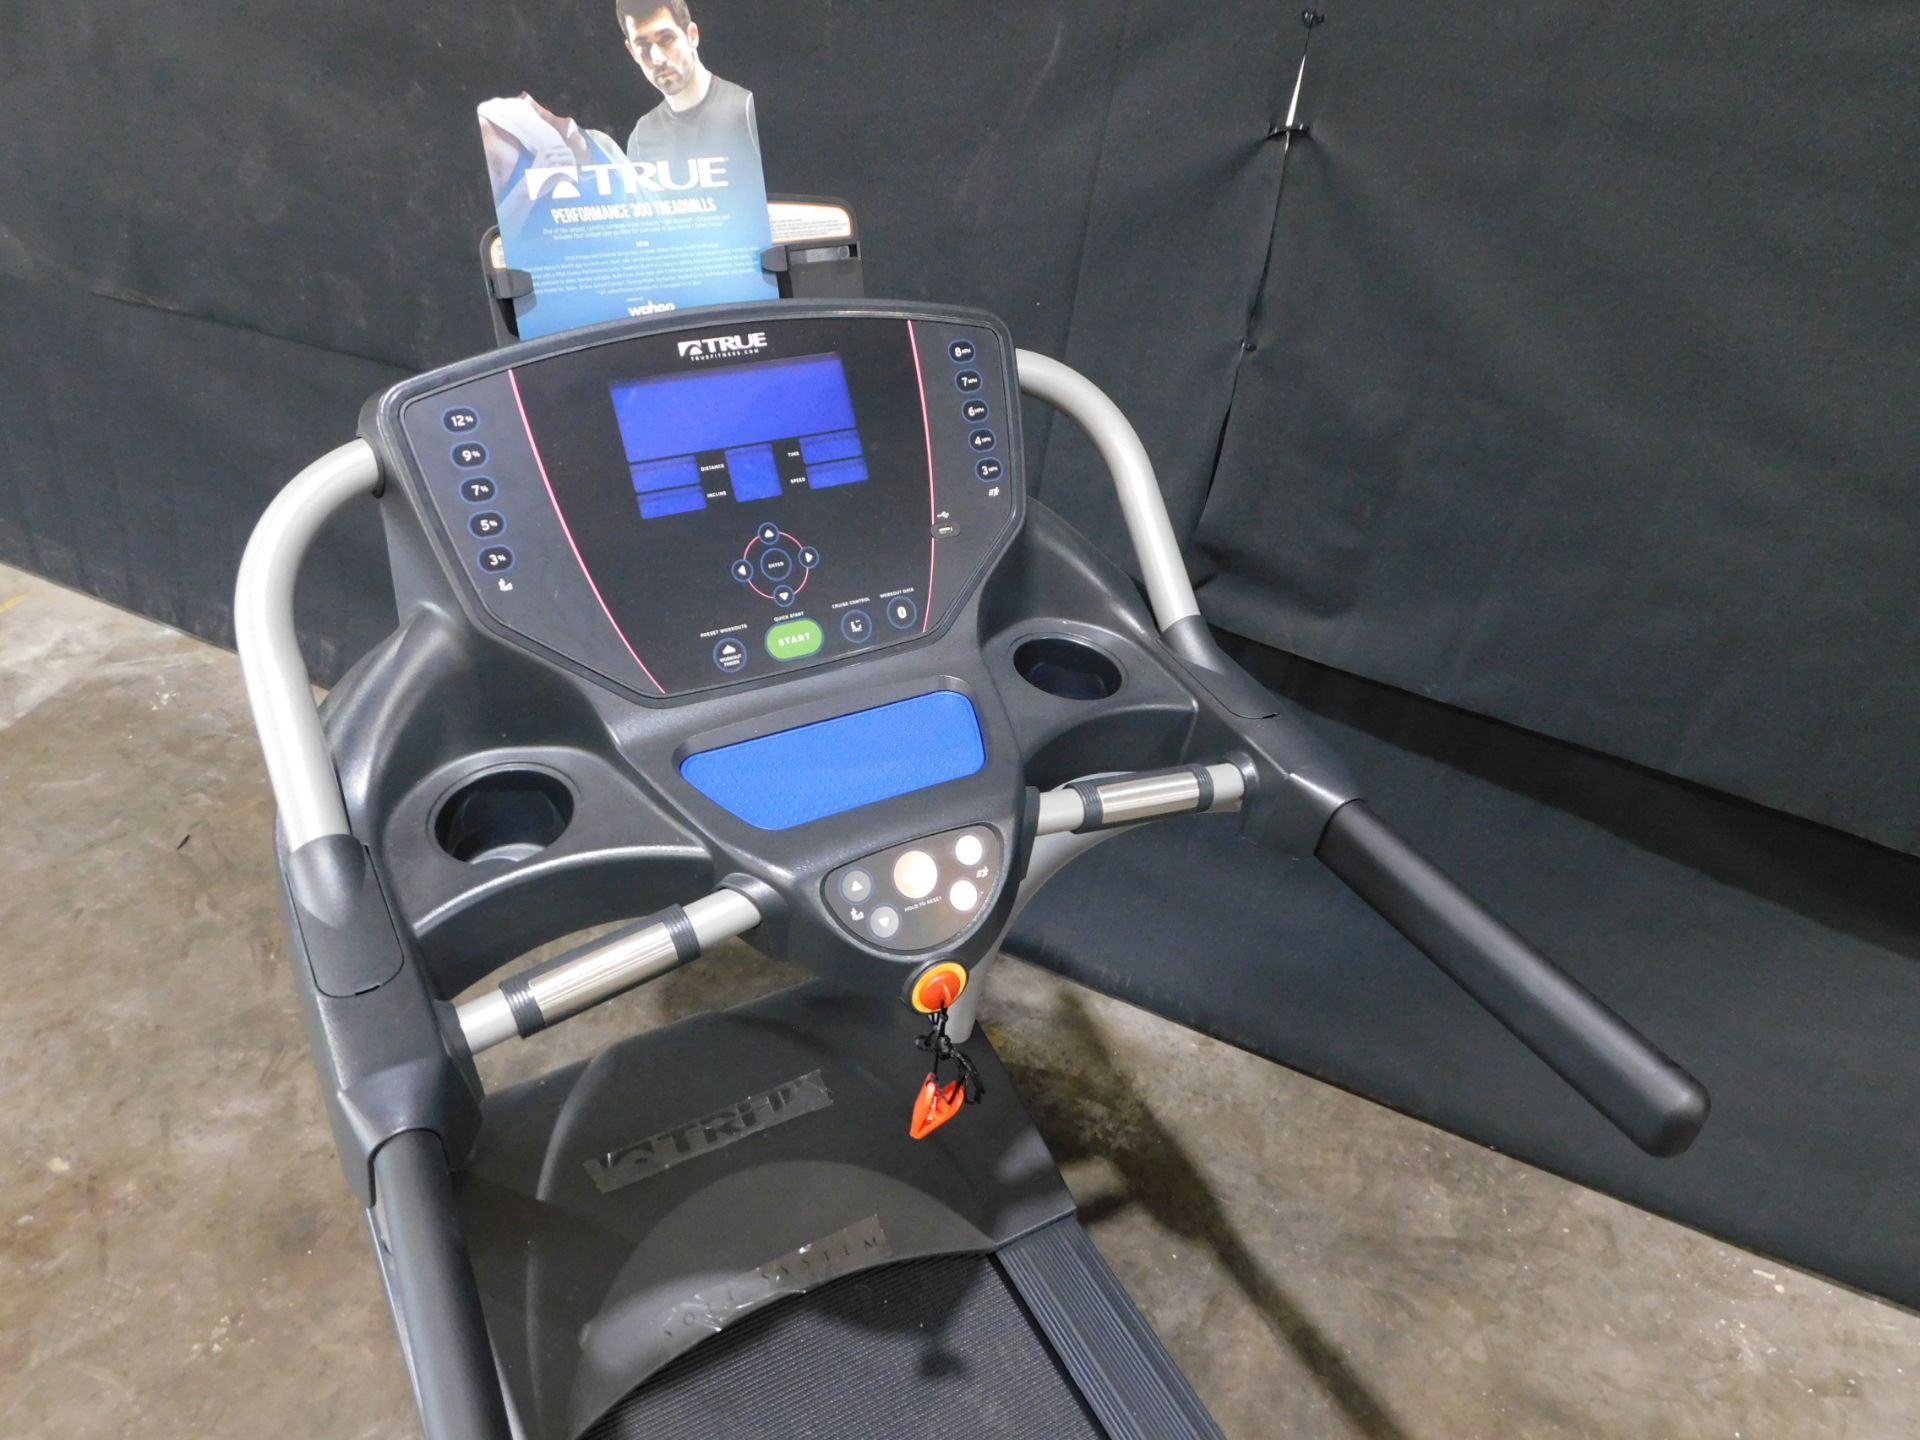 True Performance 300 Treadmill-Demonstrator Unit - Image 8 of 16